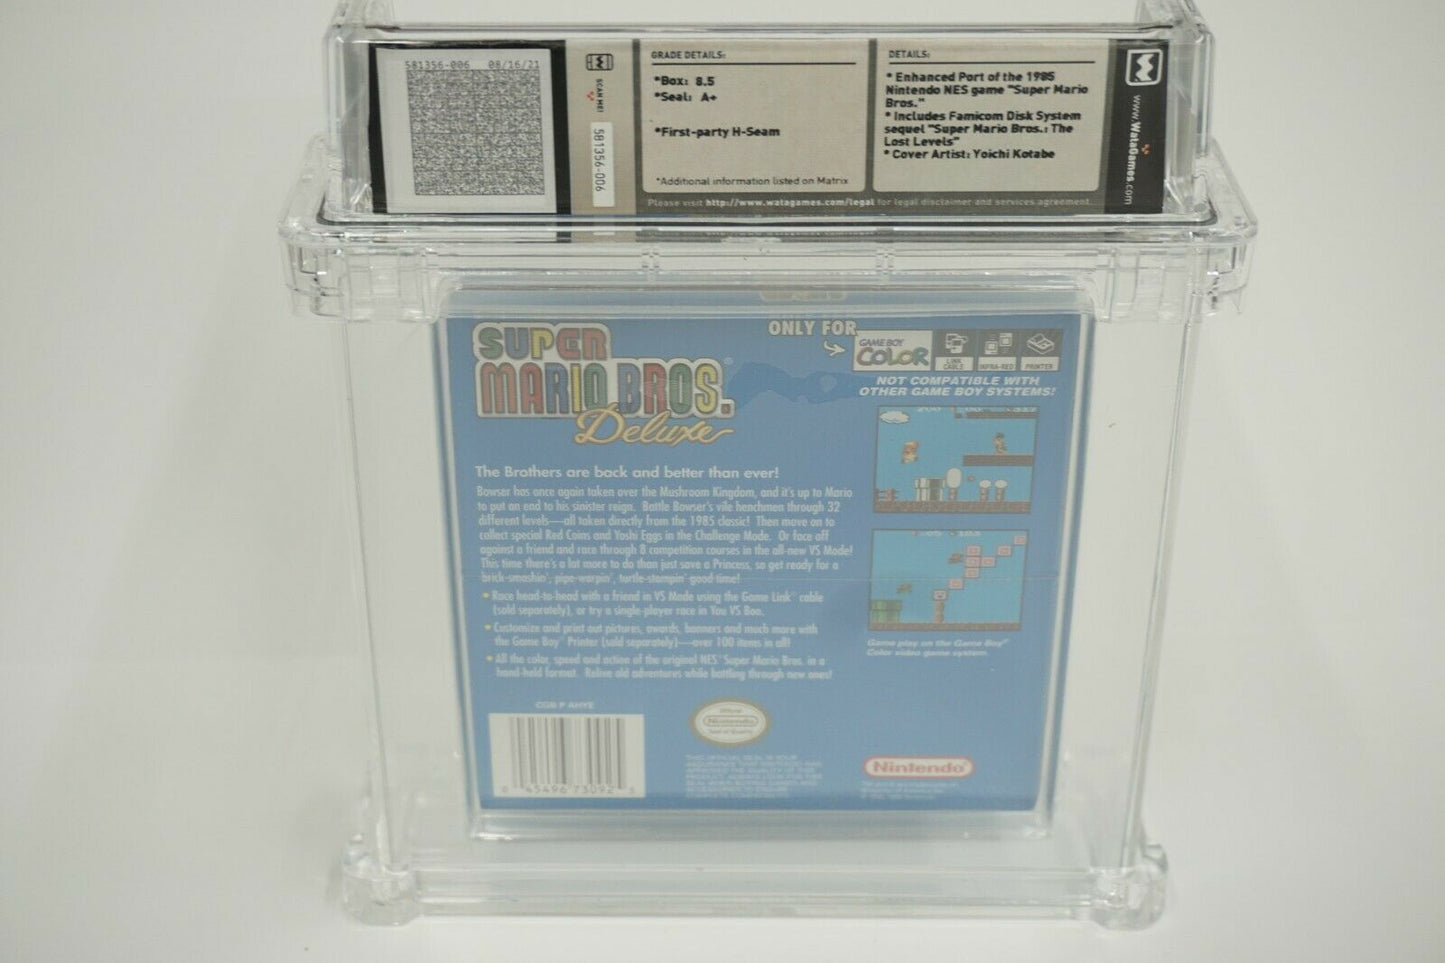 Graded - Super Mario Bros. Deluxe First Print VGA Wata 8.5 A+ GameBoy Color Foil